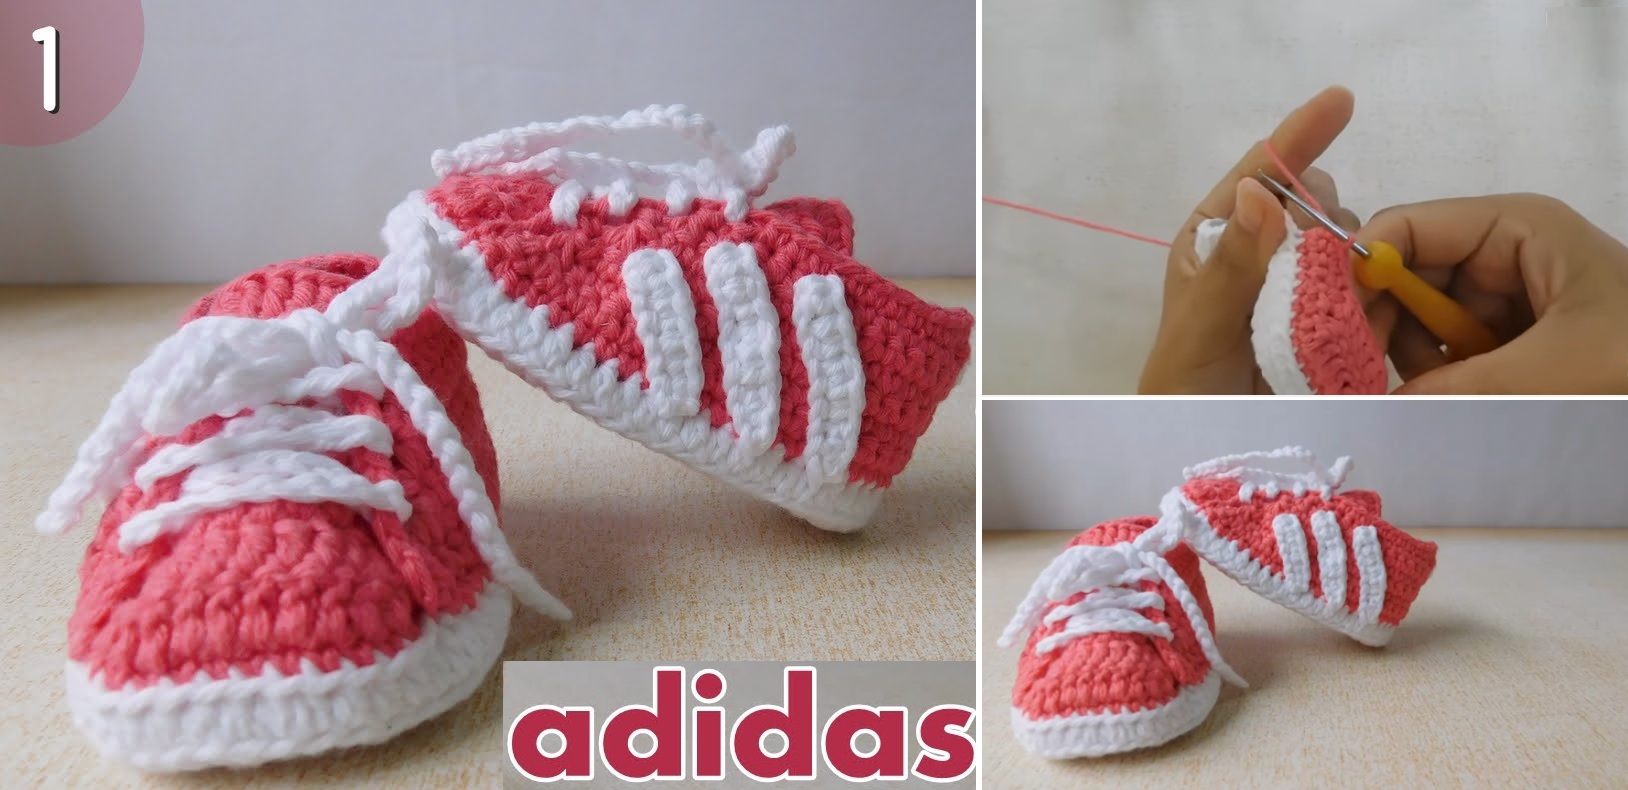 Crochet Baby Booties Adidas Style